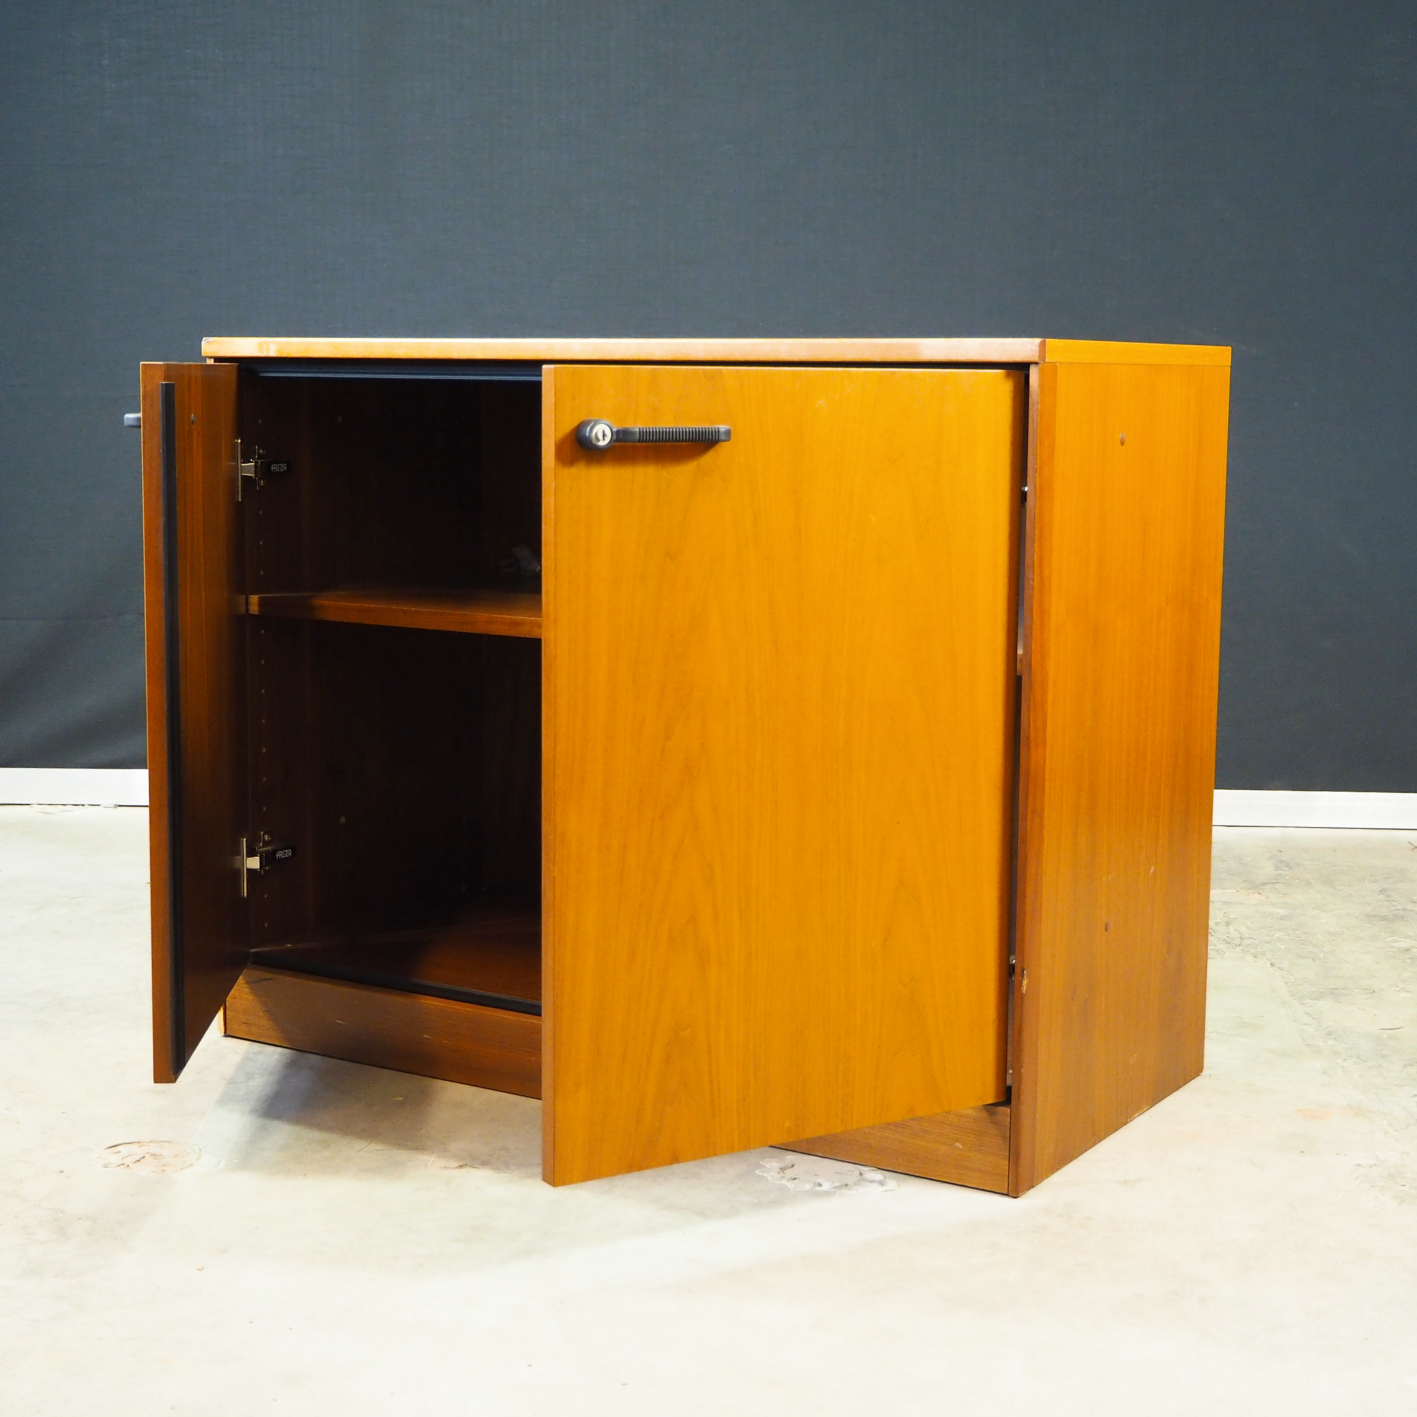 Wooden cabinet by Frezza